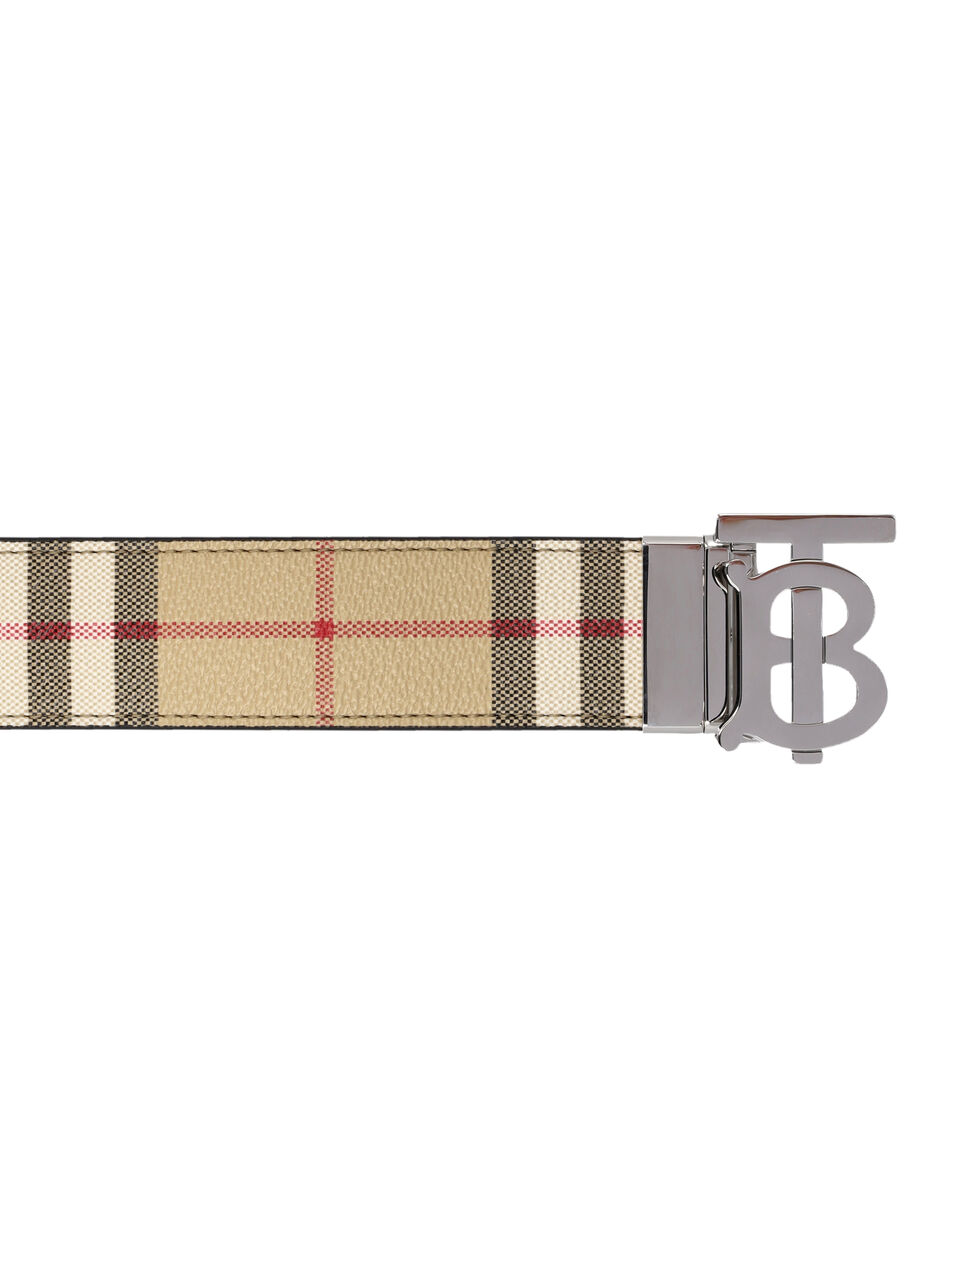 TB Vintage Check Belt in Beige - Burberry